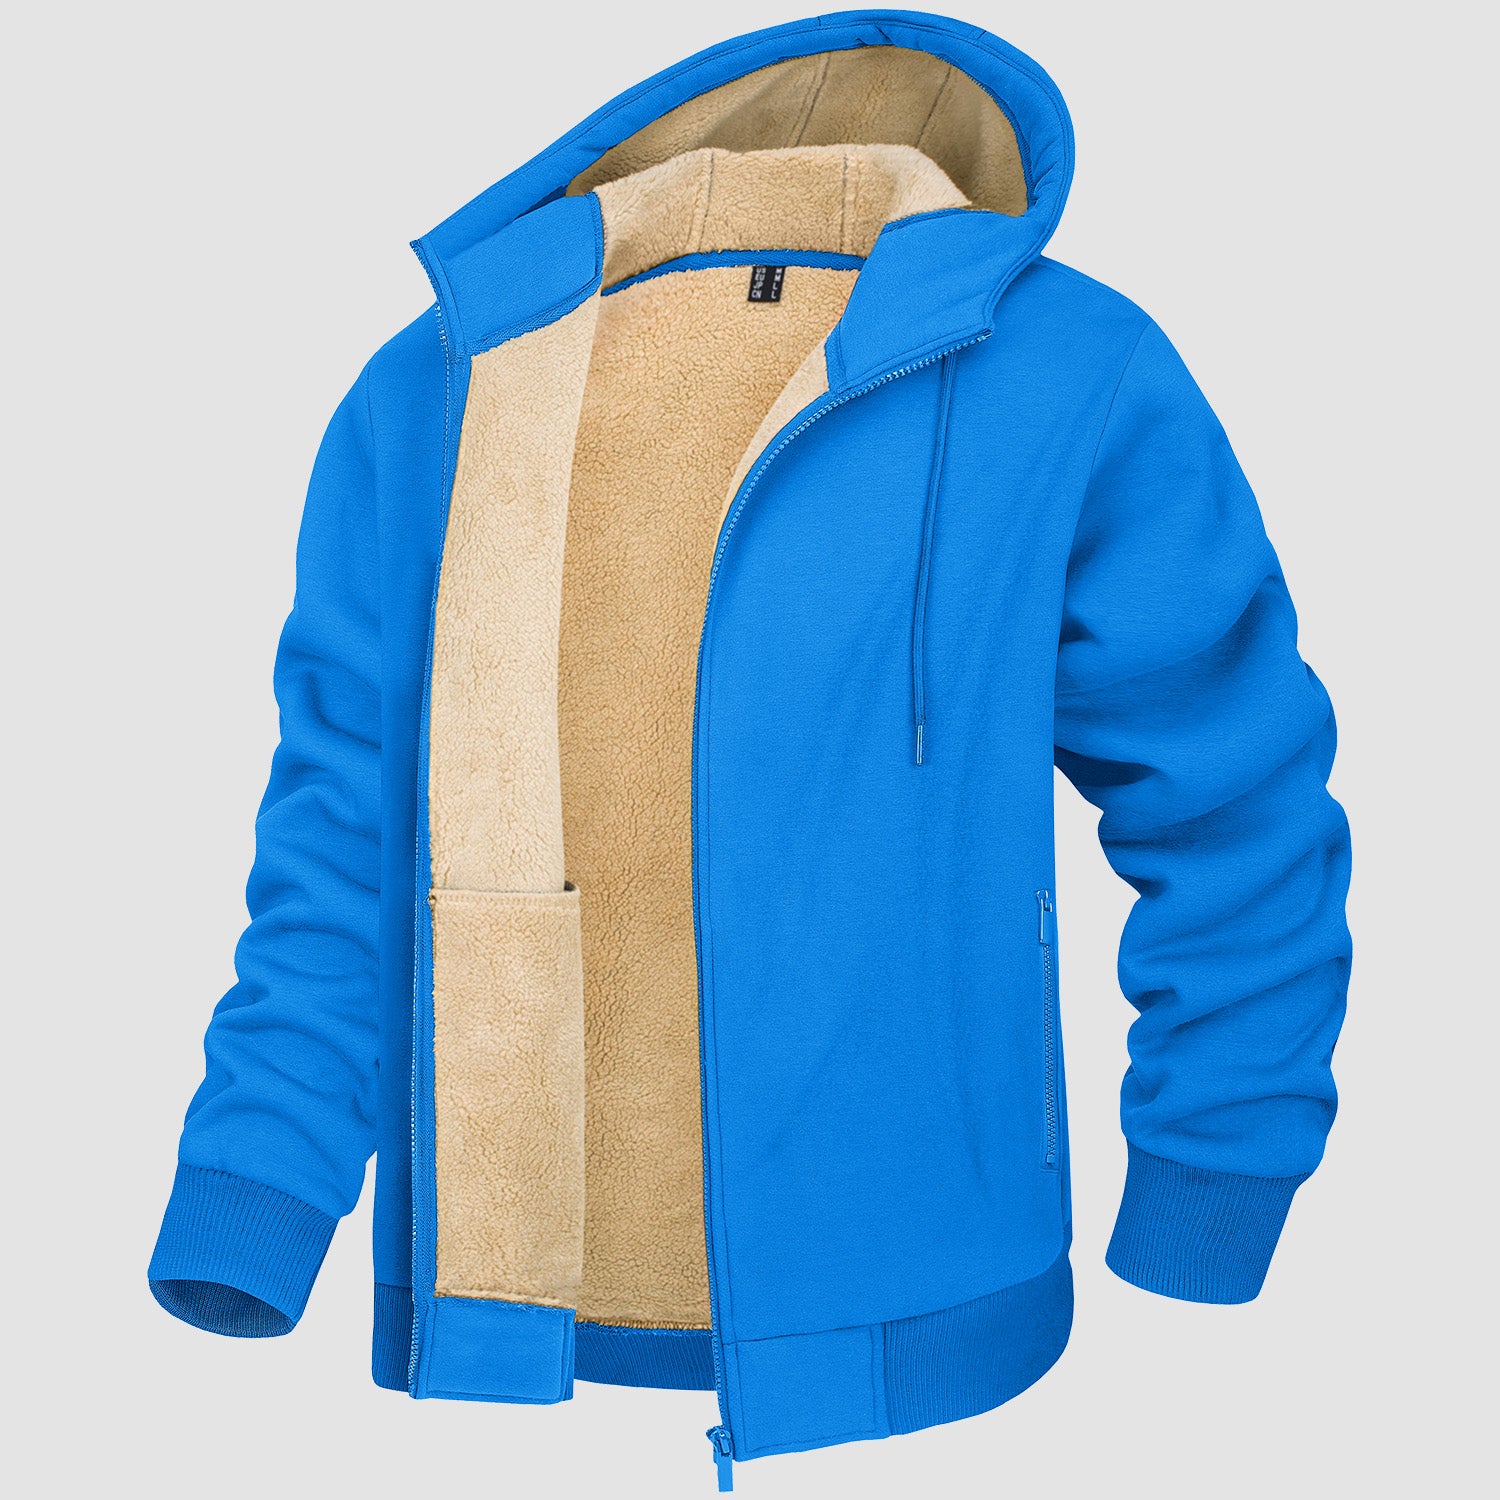 Men's Zipper Hoodie Jacket Fleece Lined Warm Jacket for Winter